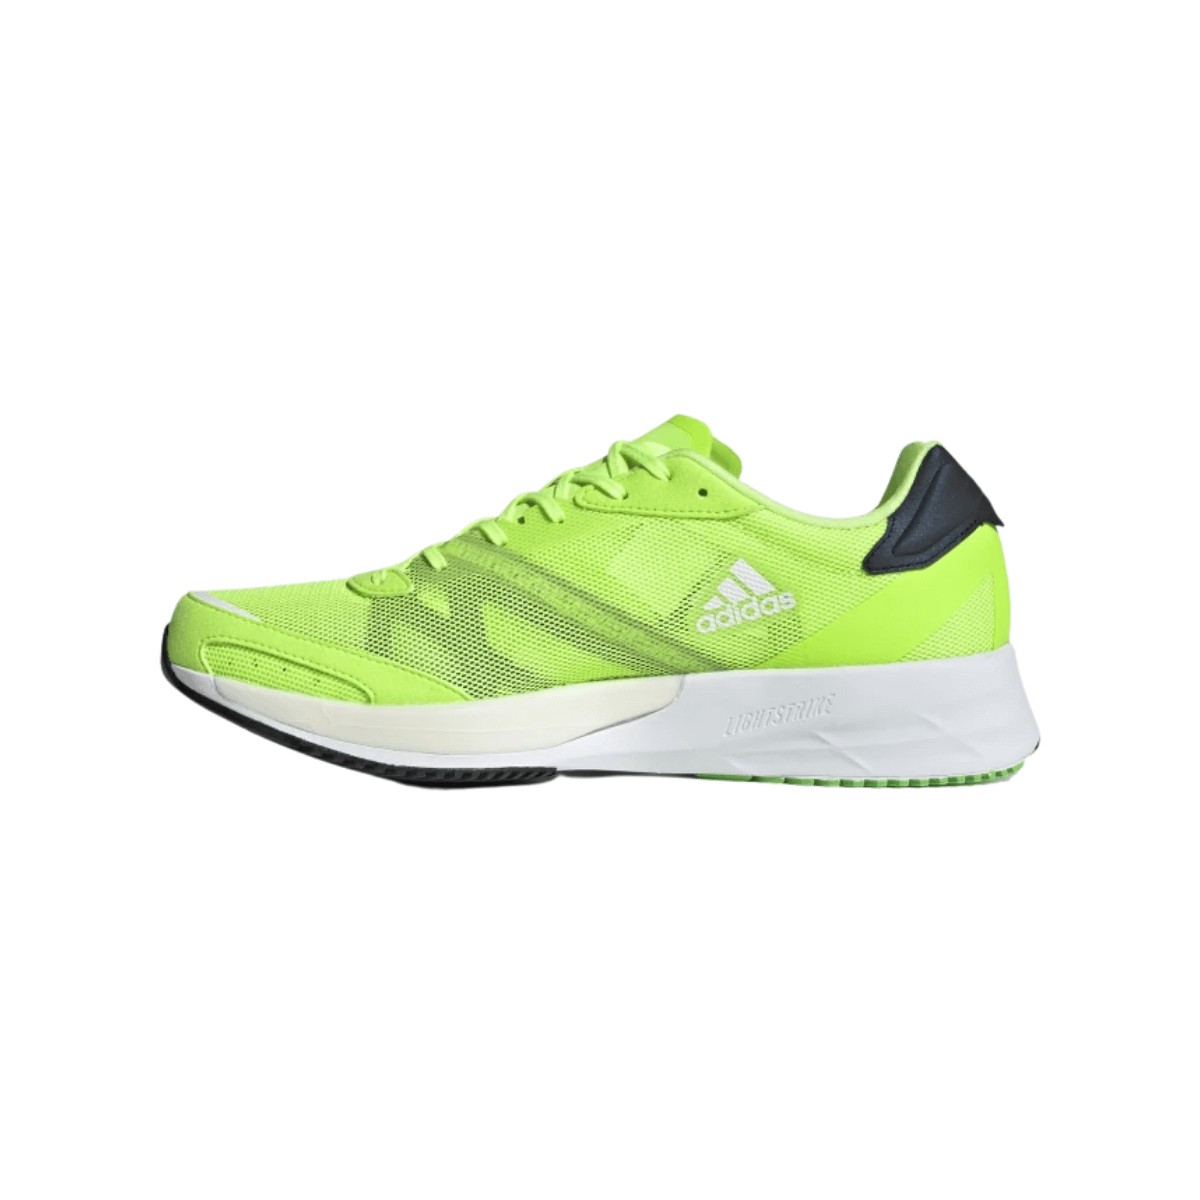 Post impresionismo Incienso Persona responsable Adidas Adizero Adios 6 Running Shoes Lime Green AW21